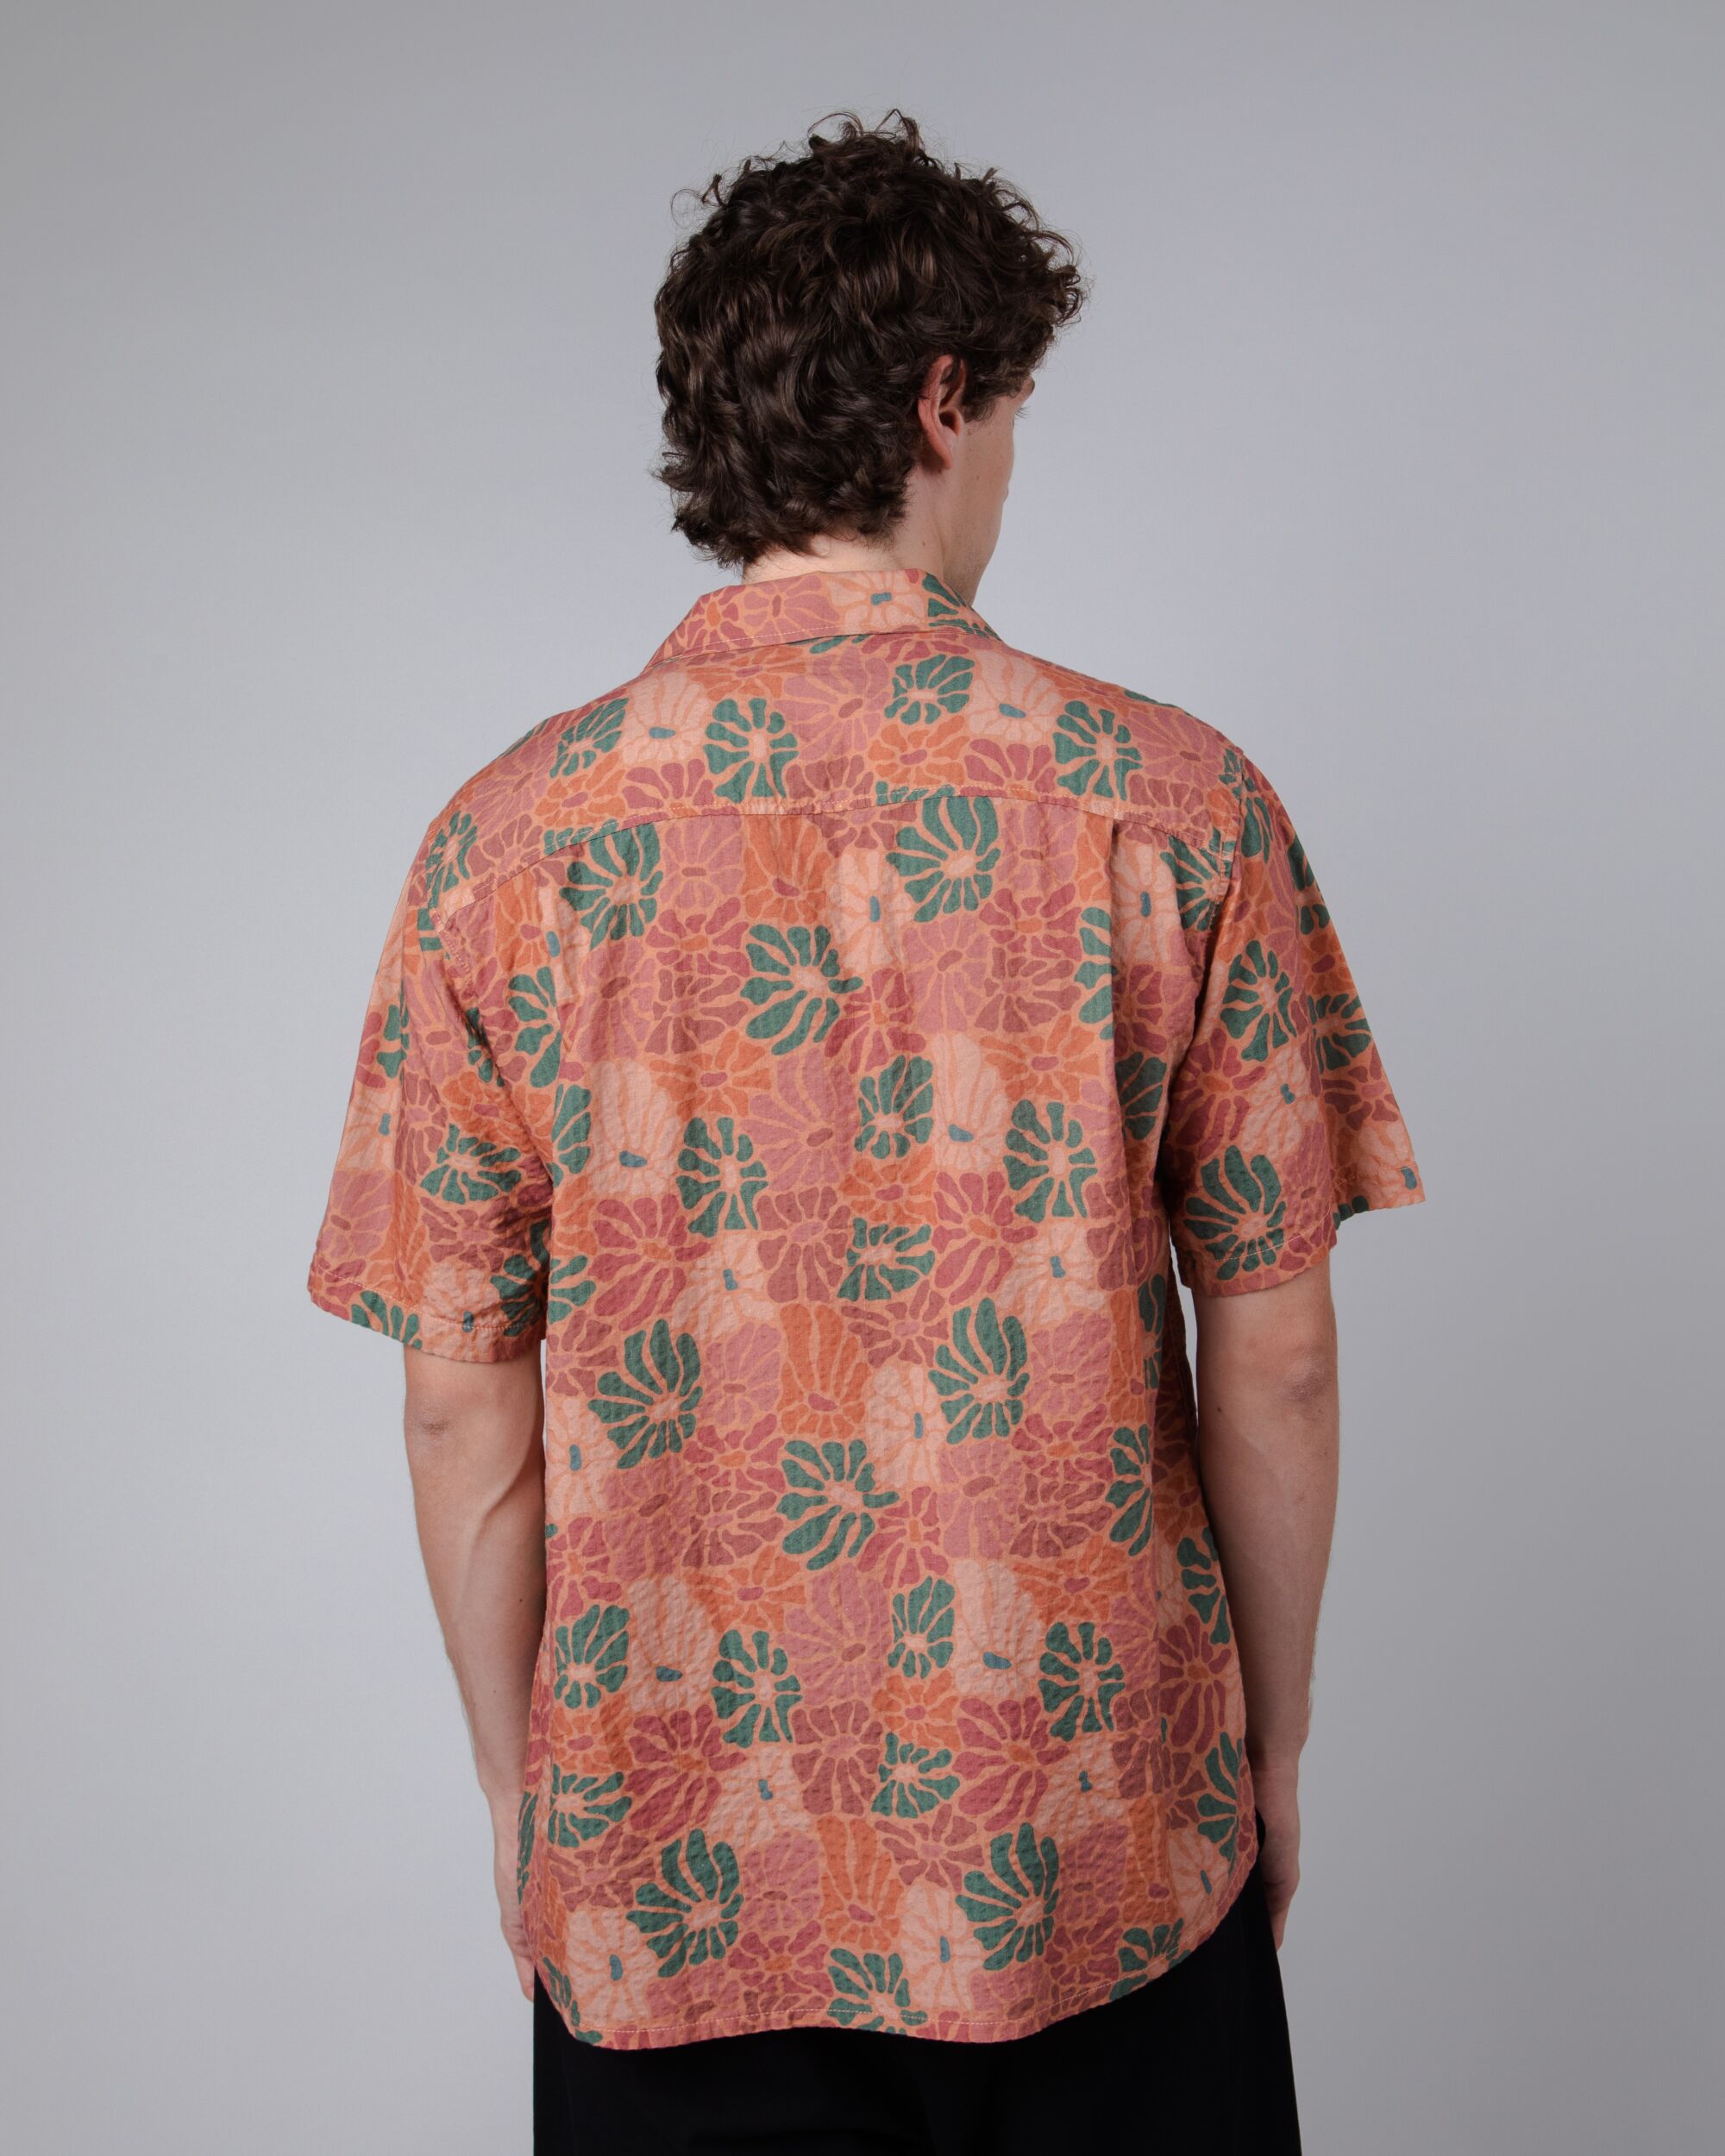 Short-sleeved Spring Aloha shirt in orange made of organic cotton and viscose from Brava Fabrics